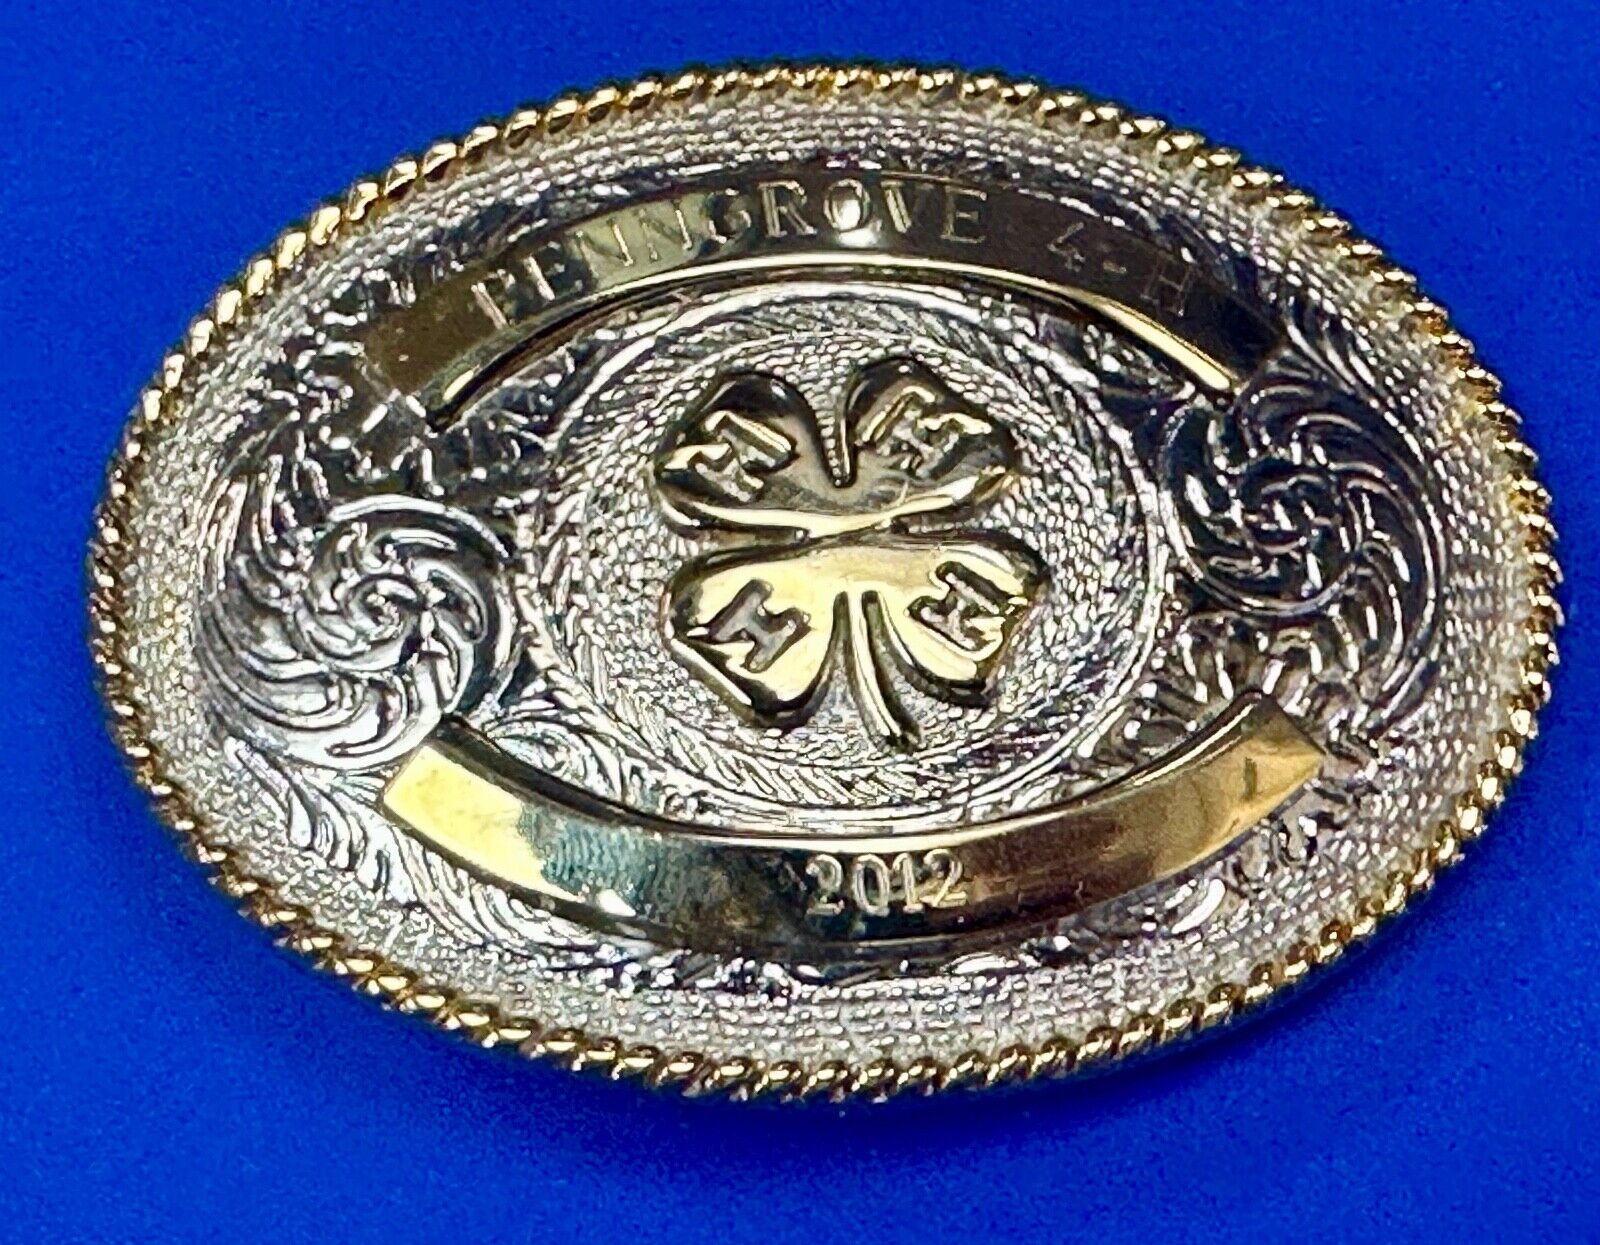 4h emblem logo  Engraved trophy style 2012 western two tone belt buckle